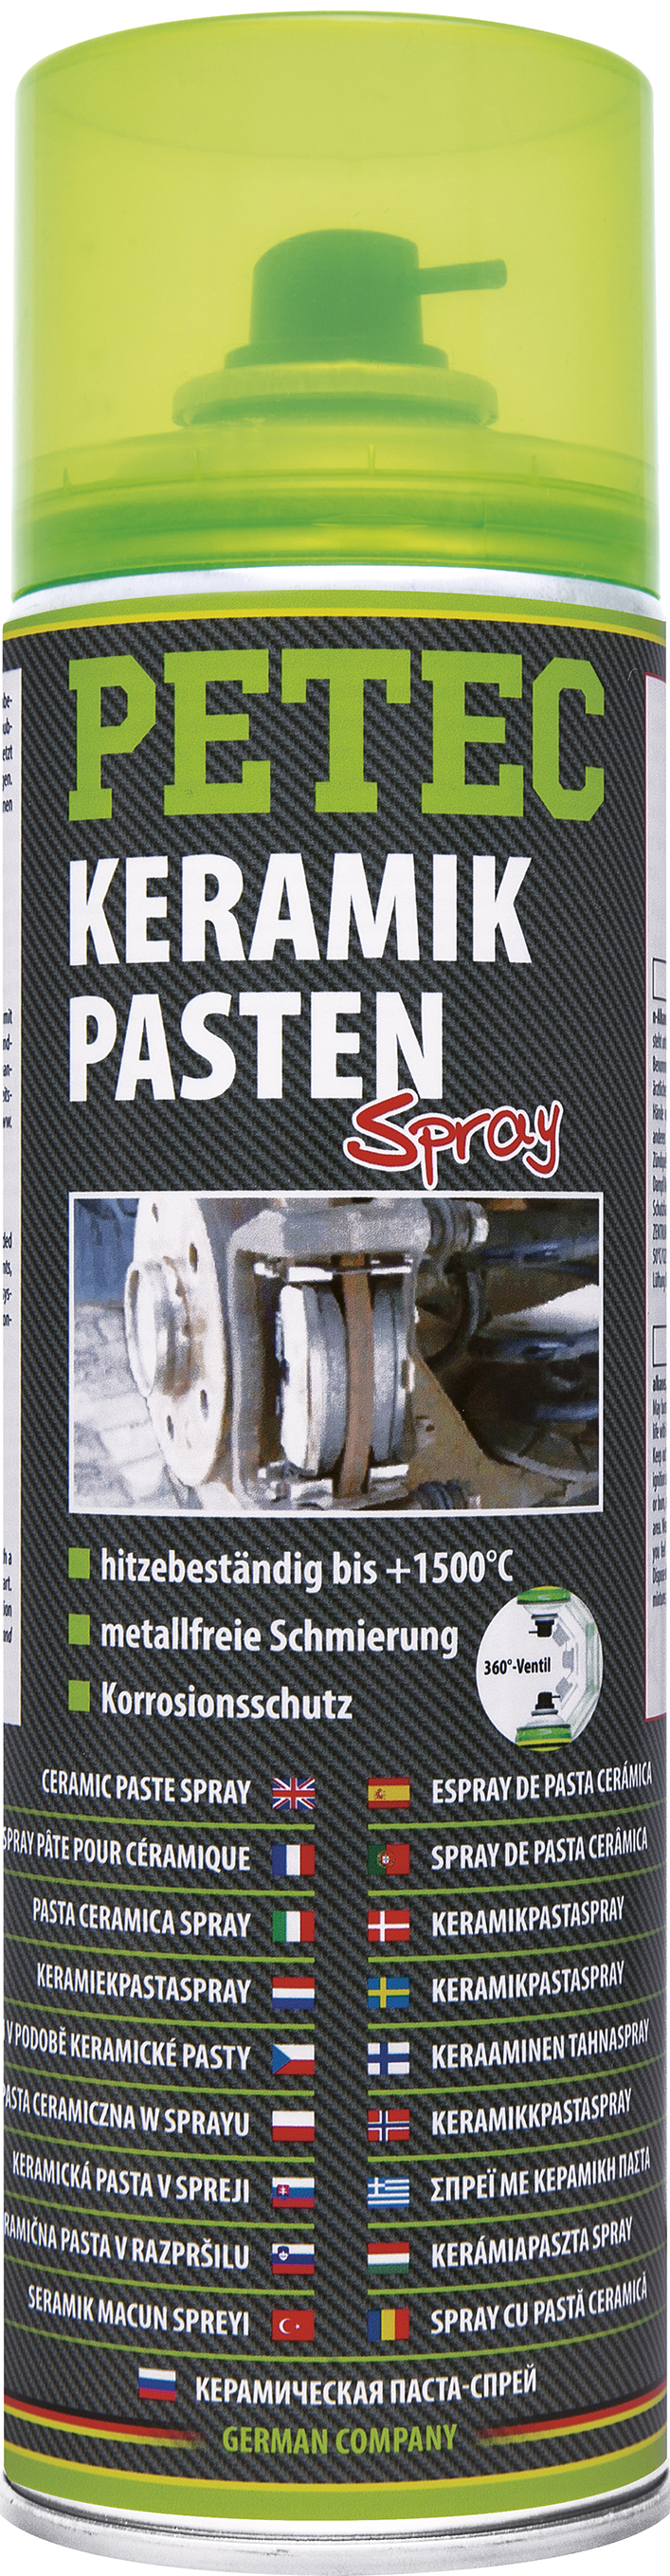 Keramikpasten-Spray, 500ml